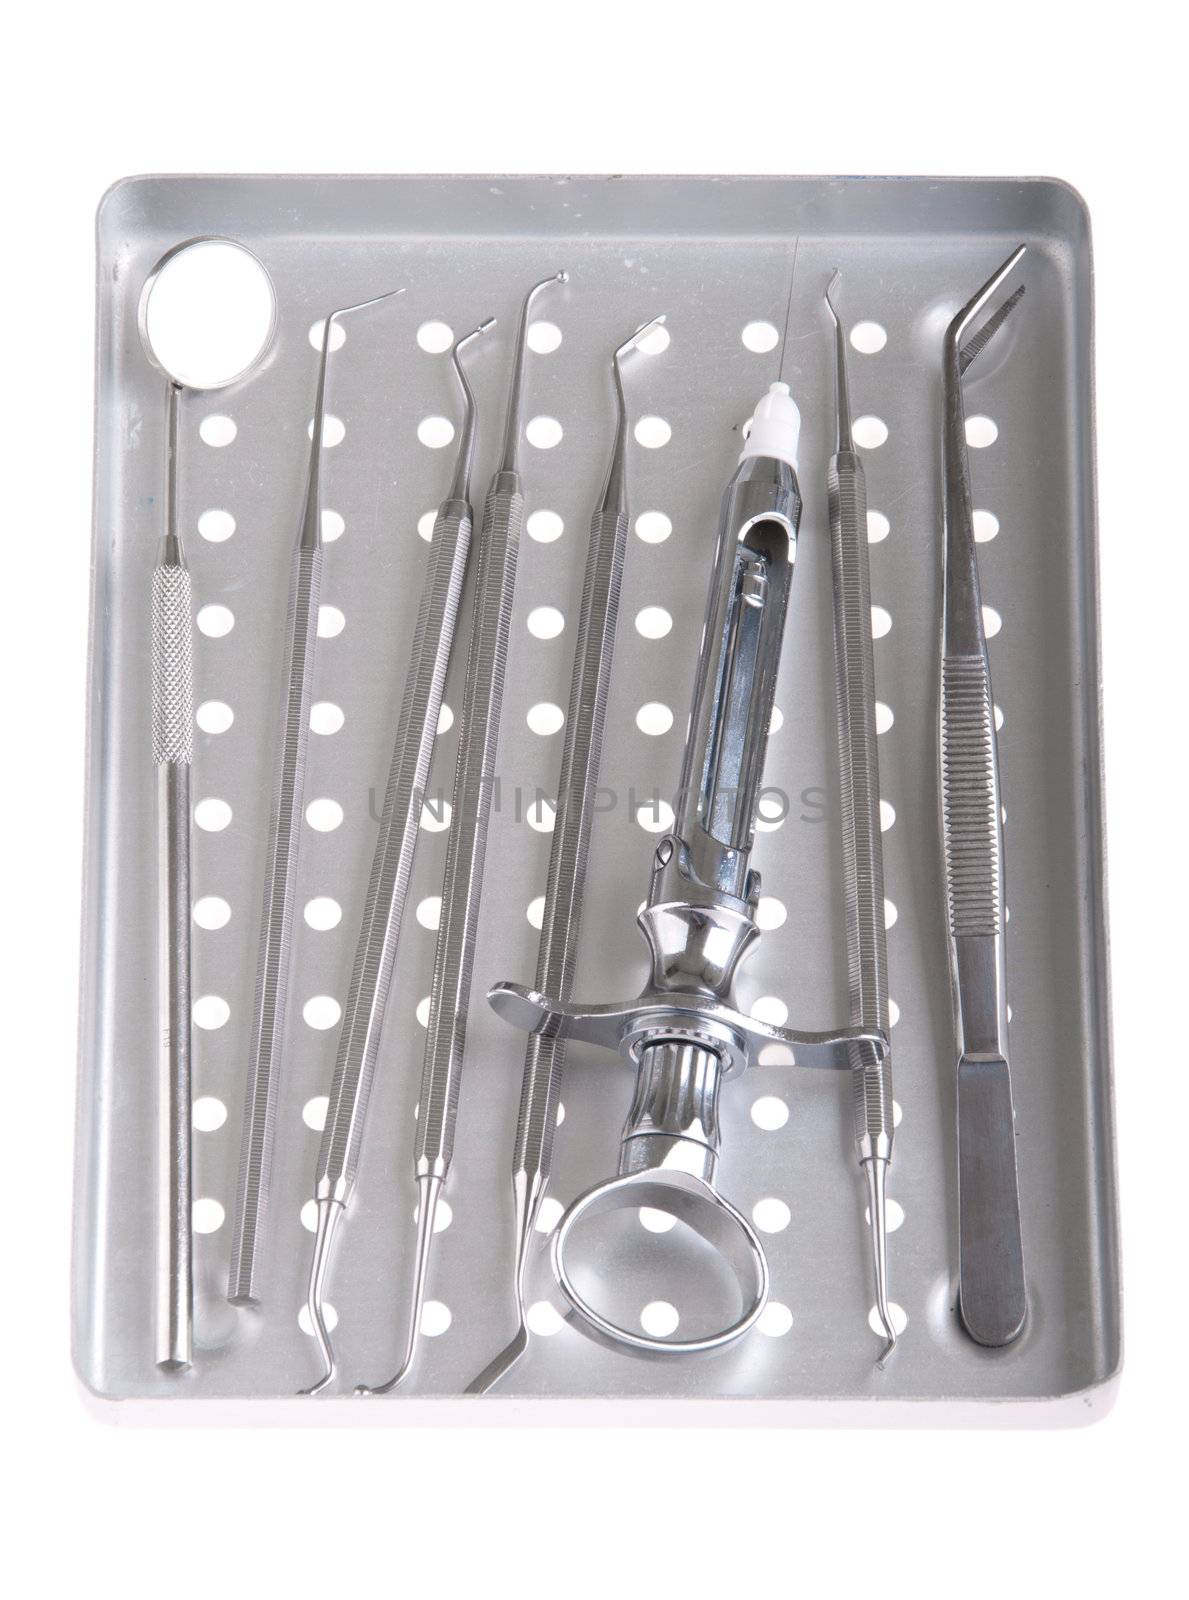 Dentistry kit by luissantos84